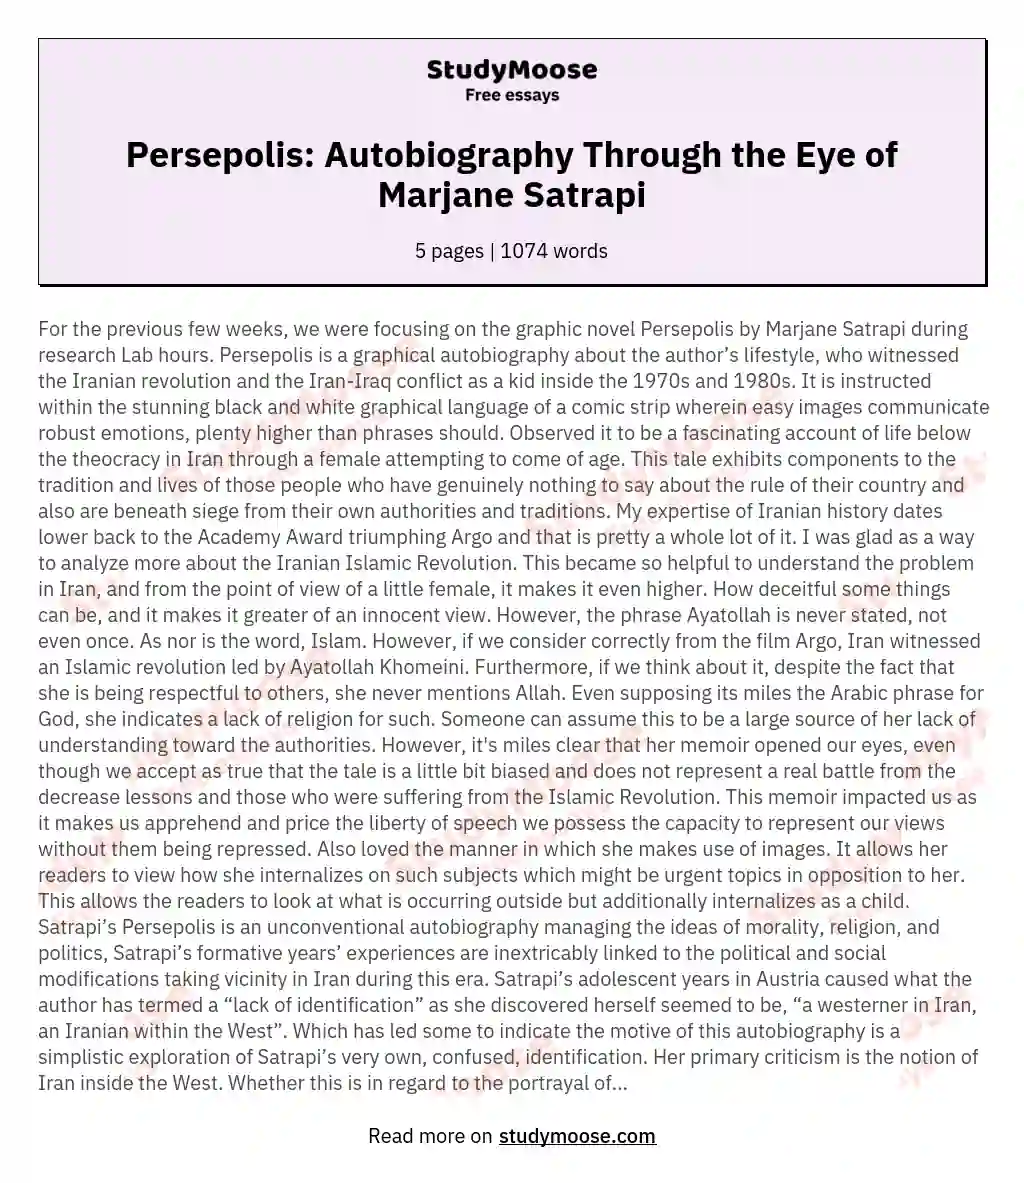 Persepolis: Autobiography Through the Eye of Marjane Satrapi